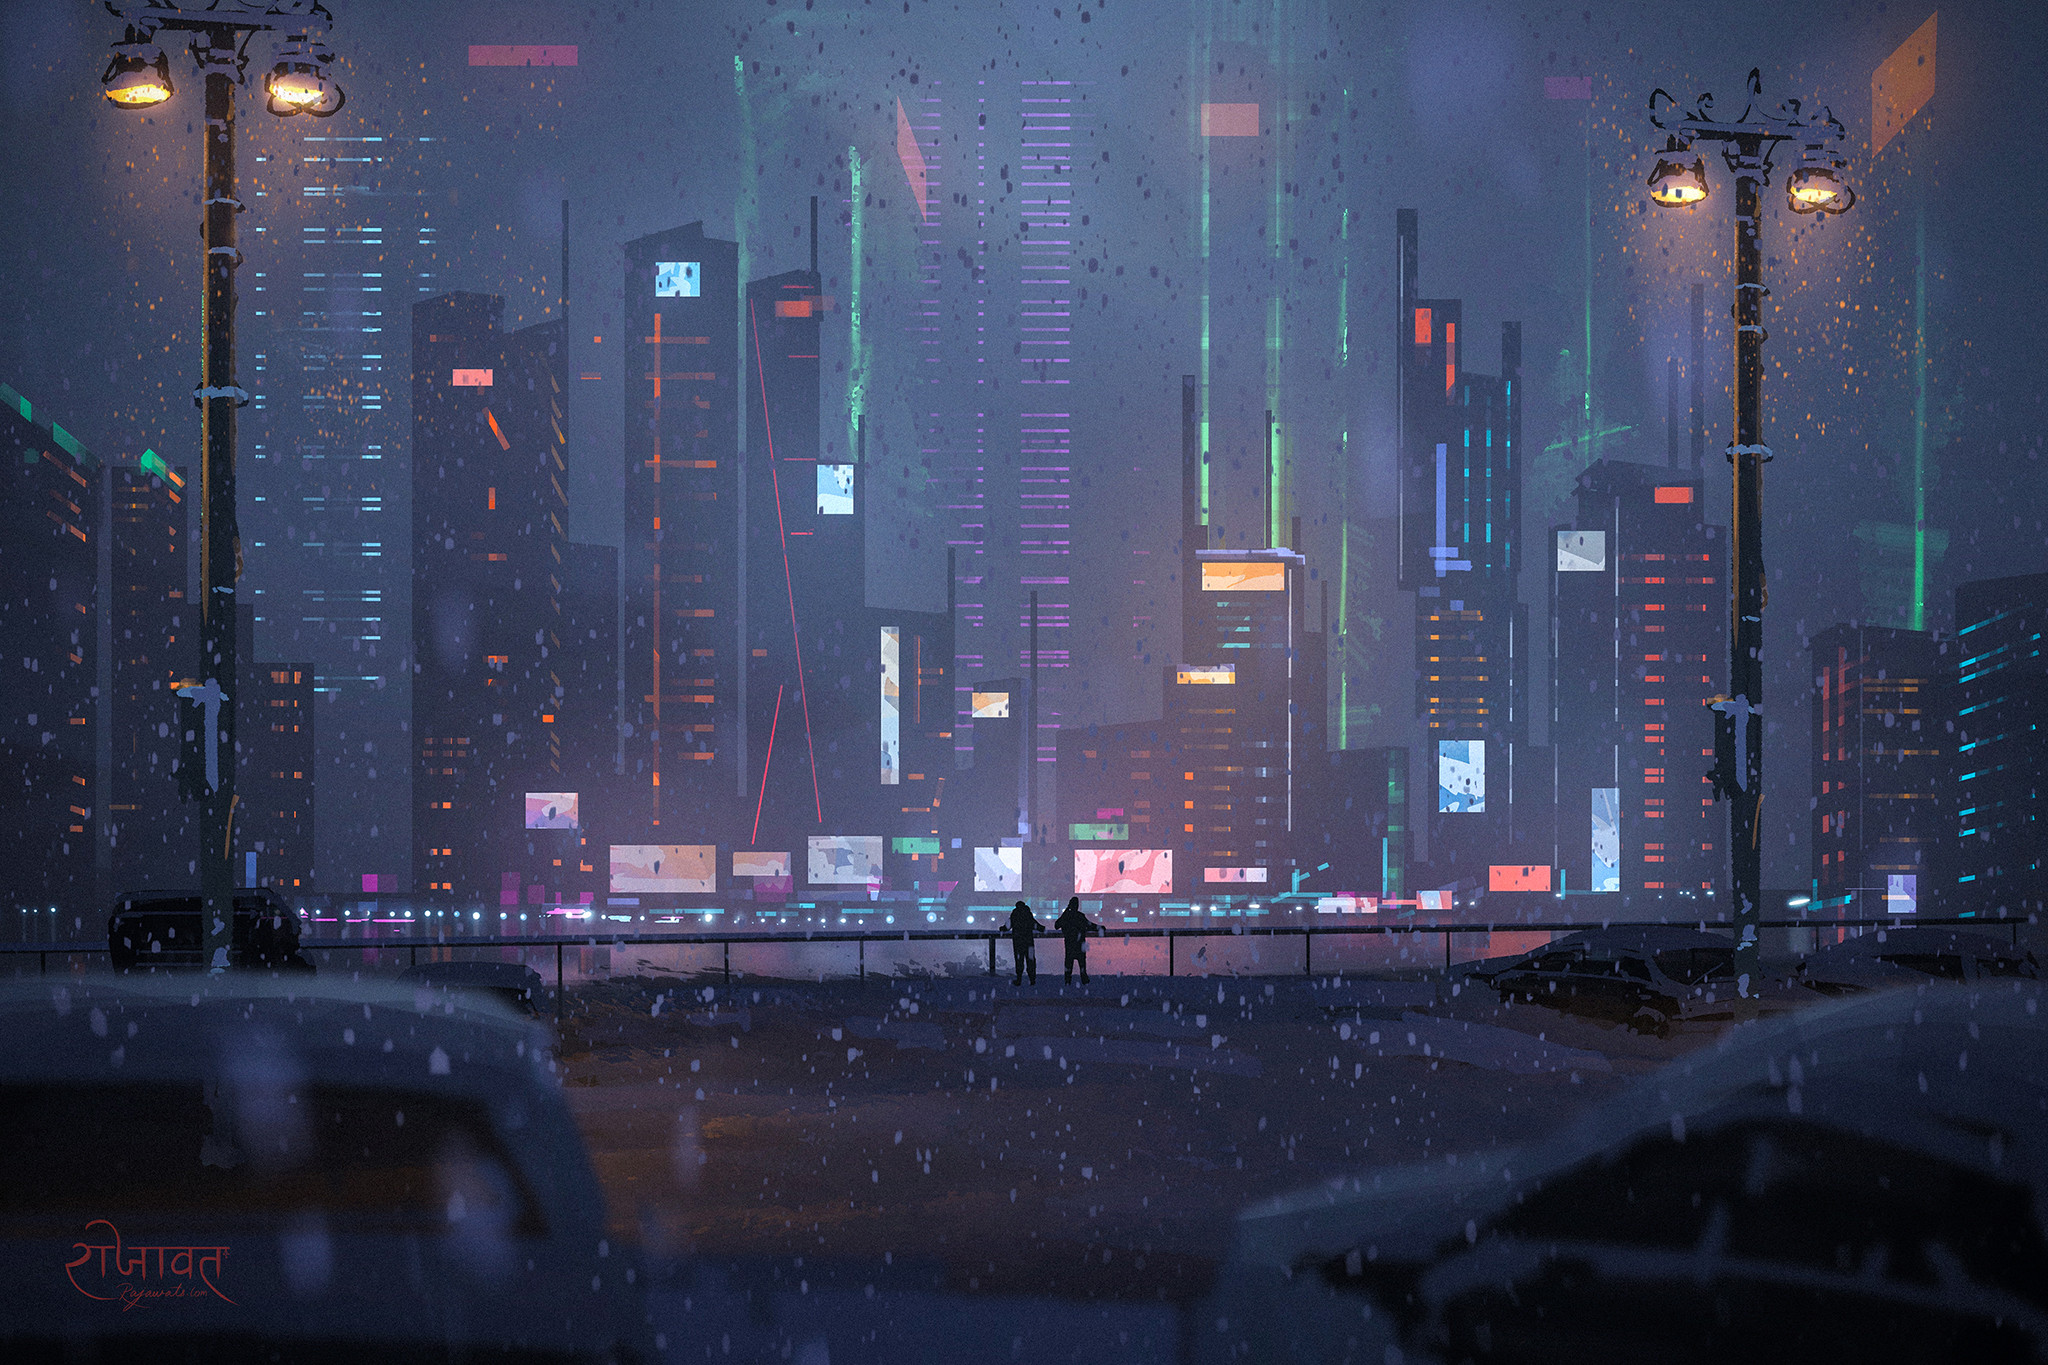 Cyberpunk City on a Snowy Night HD Wallpaper